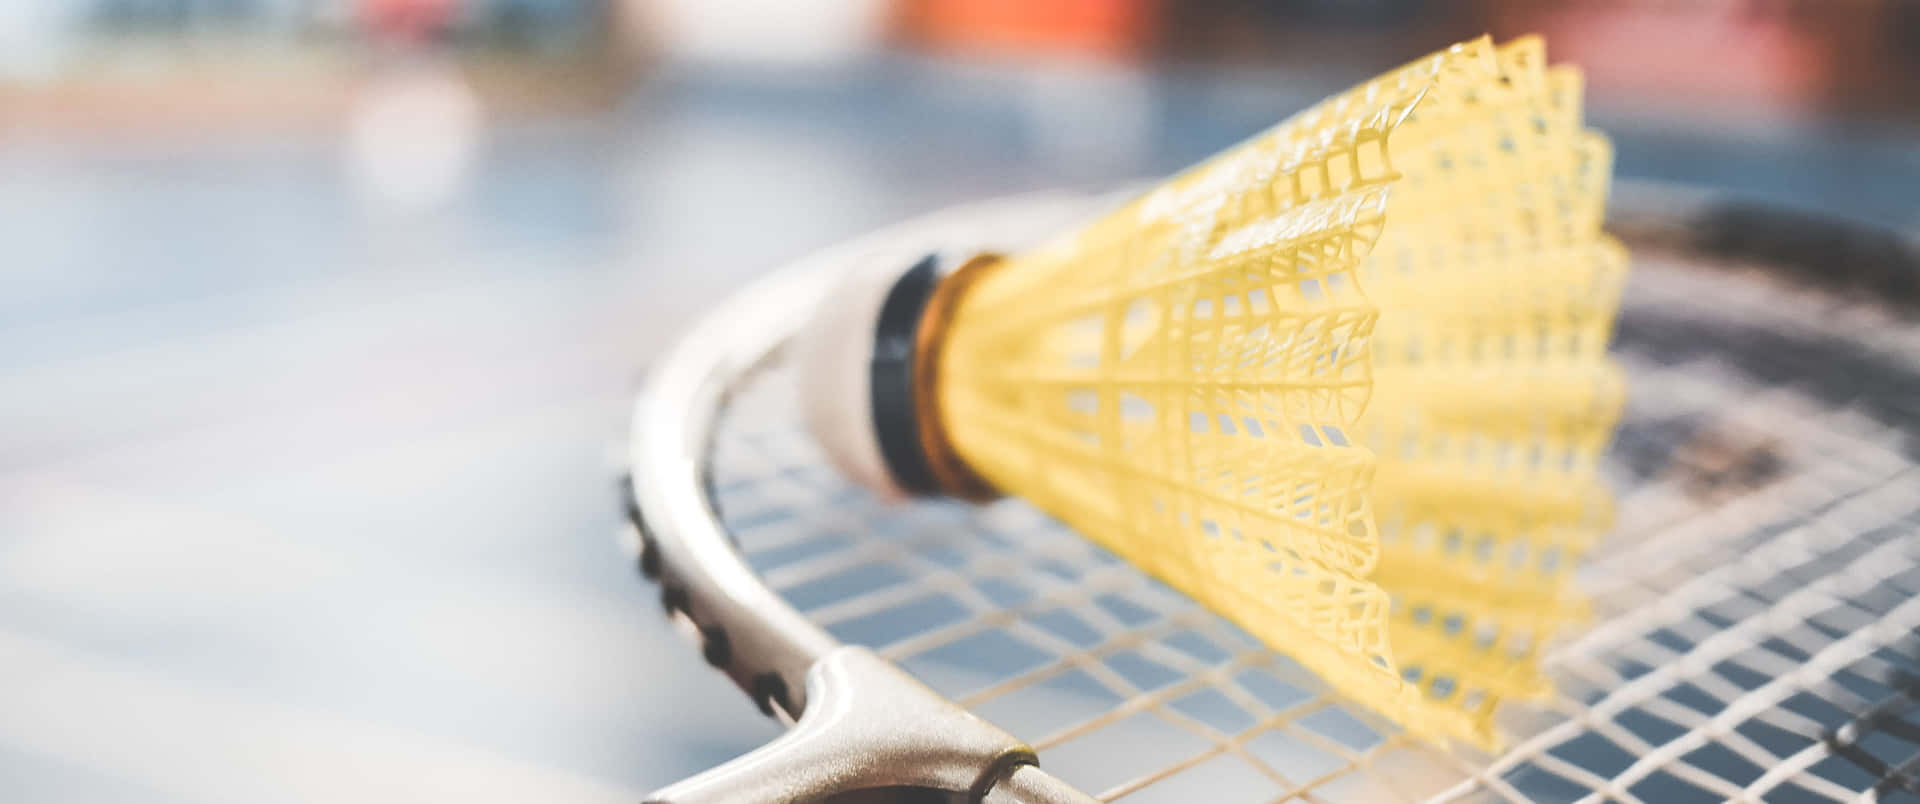 Professional Badminton Player Hitting a Smash